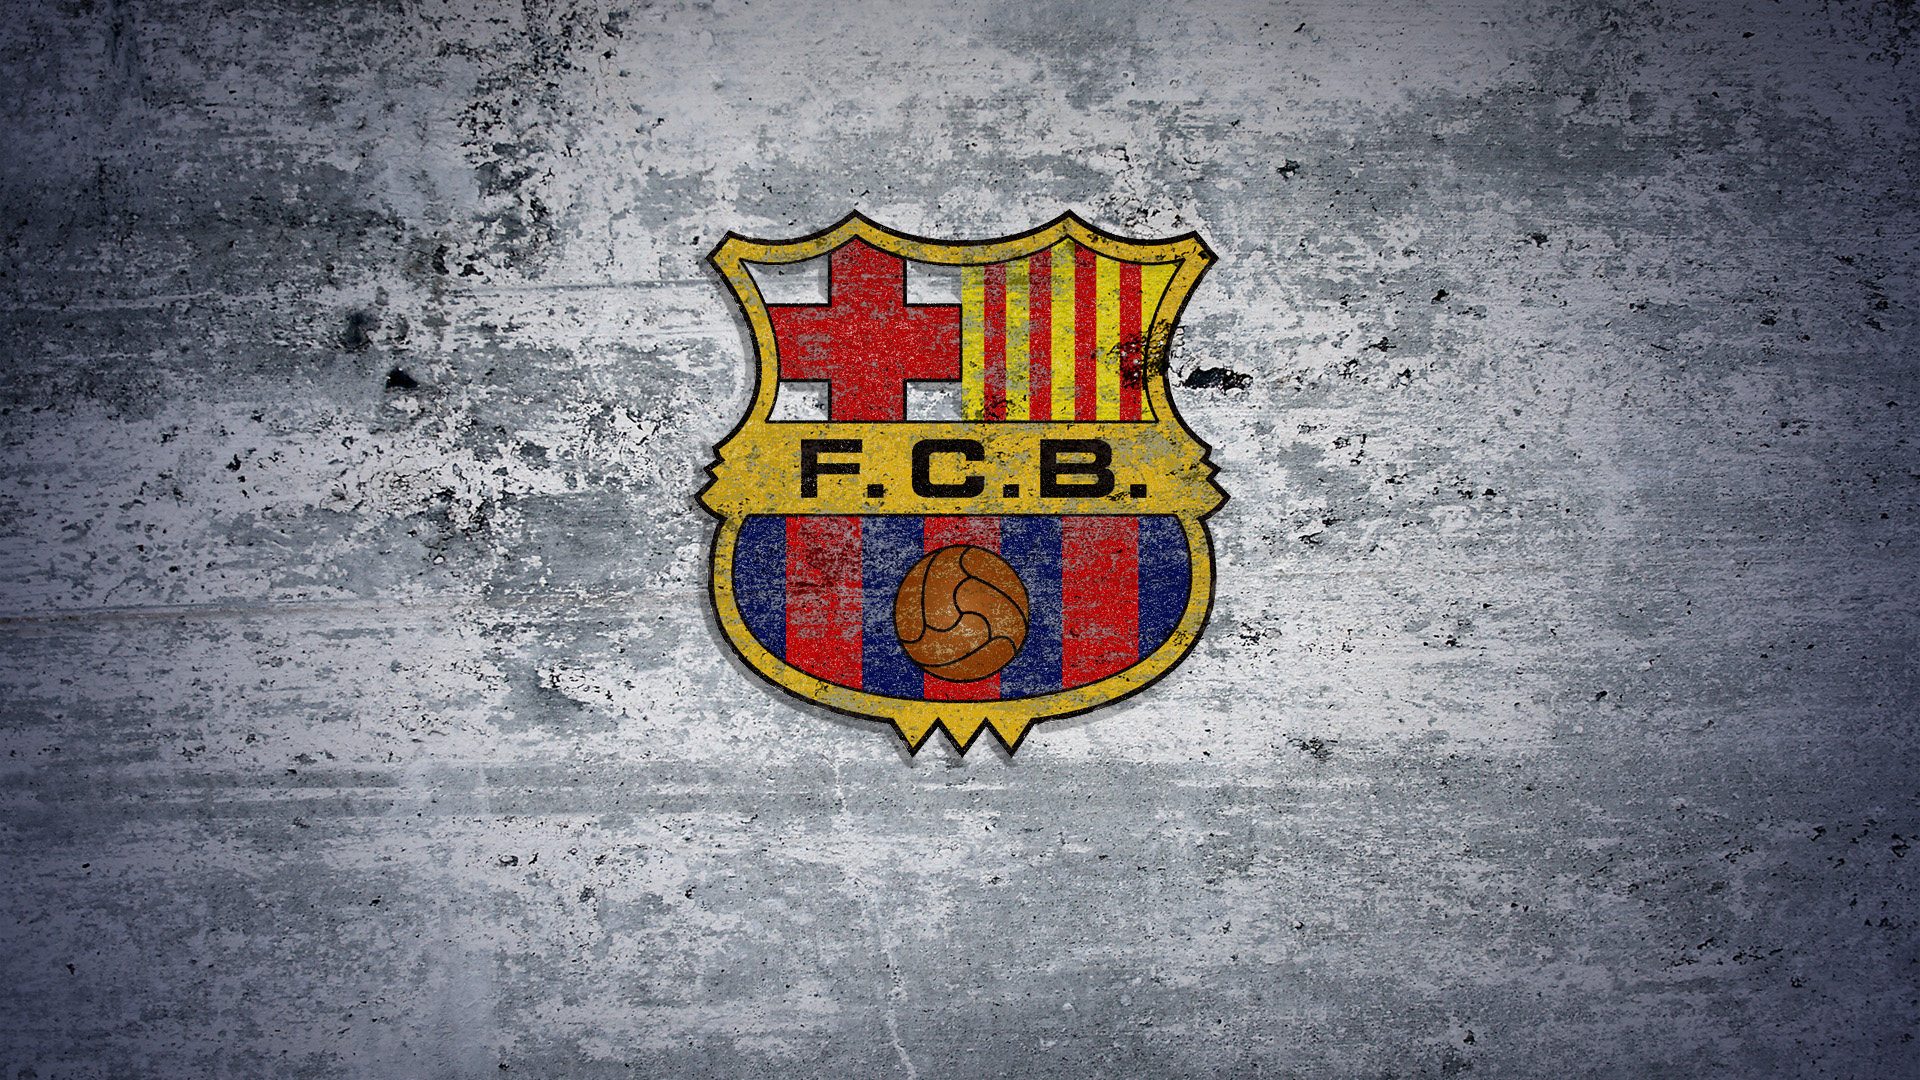 Fc Barcelona Wallpaper Desktop Image